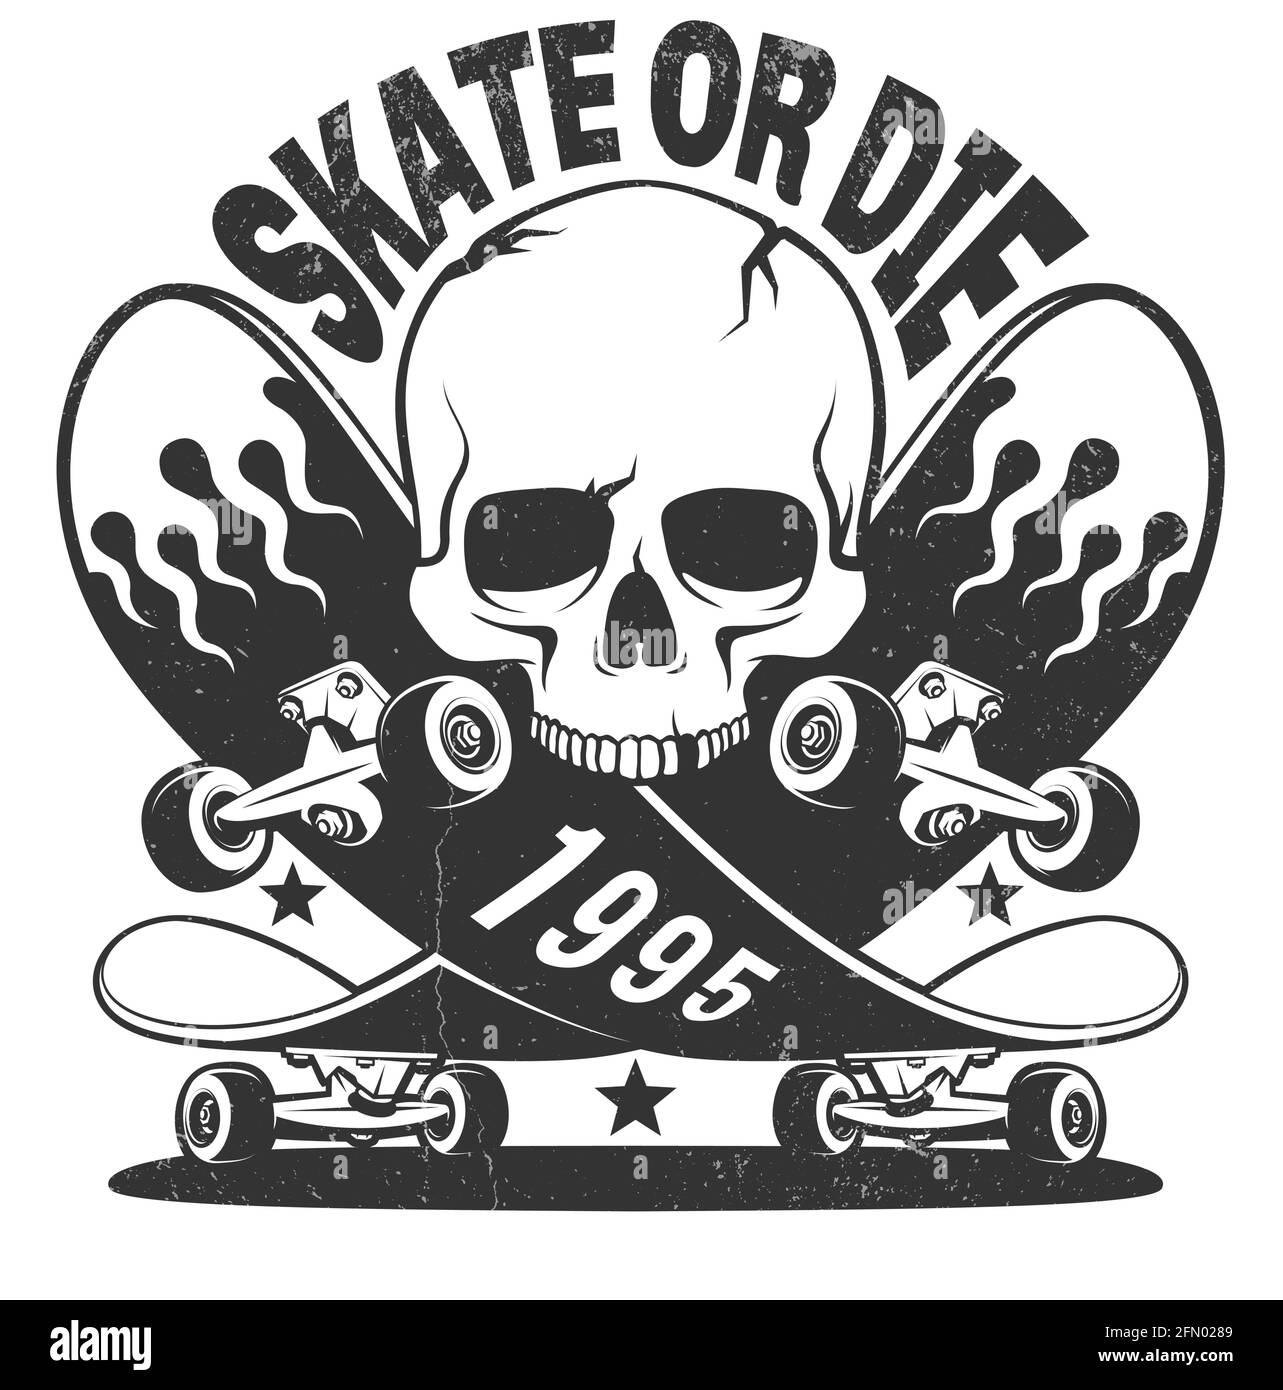 Skate ou Die vintage logo avec skateboard et crâne Image Vectorielle Stock  - Alamy